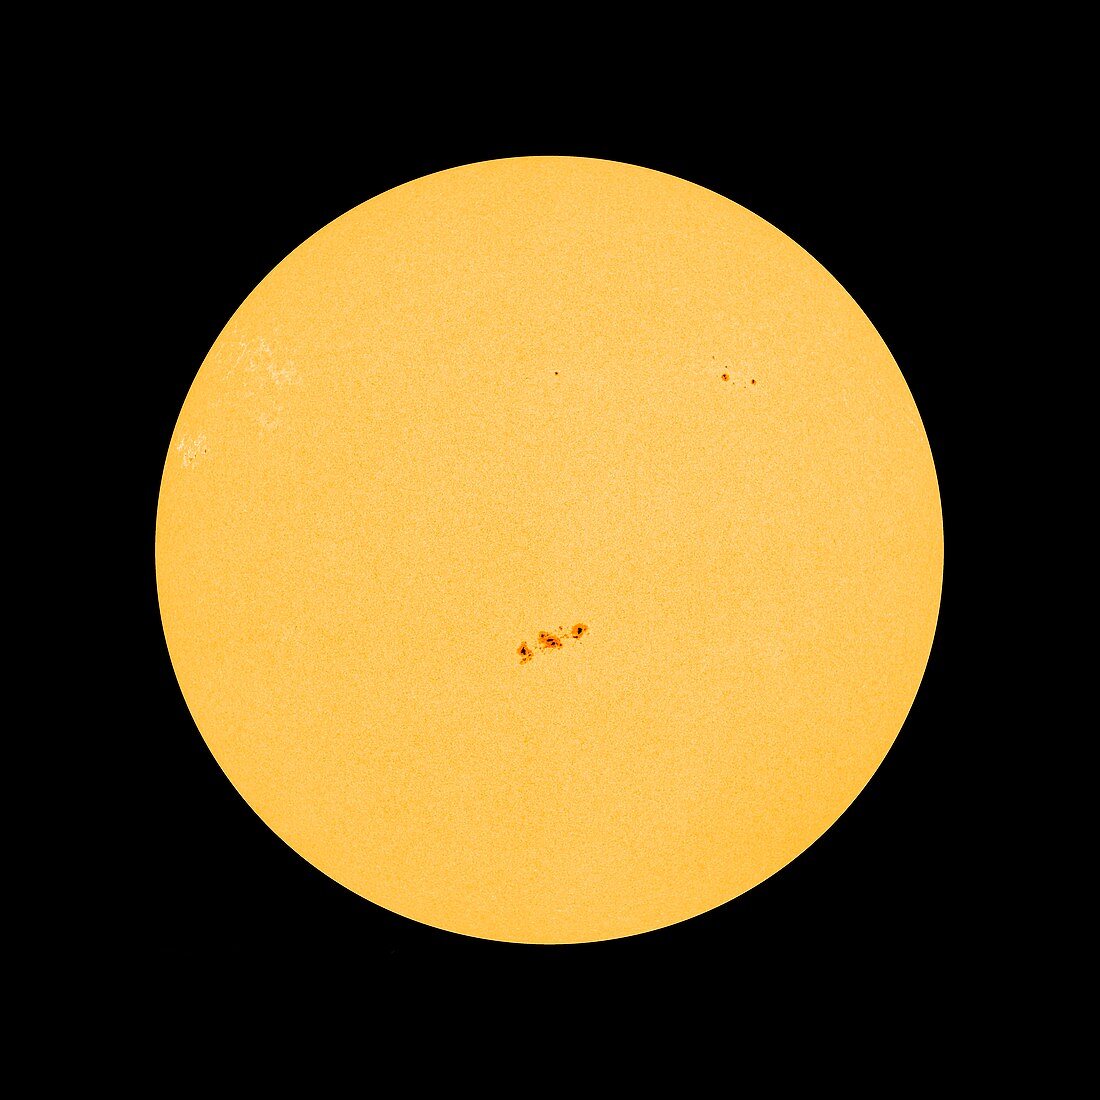 Sunspot 1158,SDO image